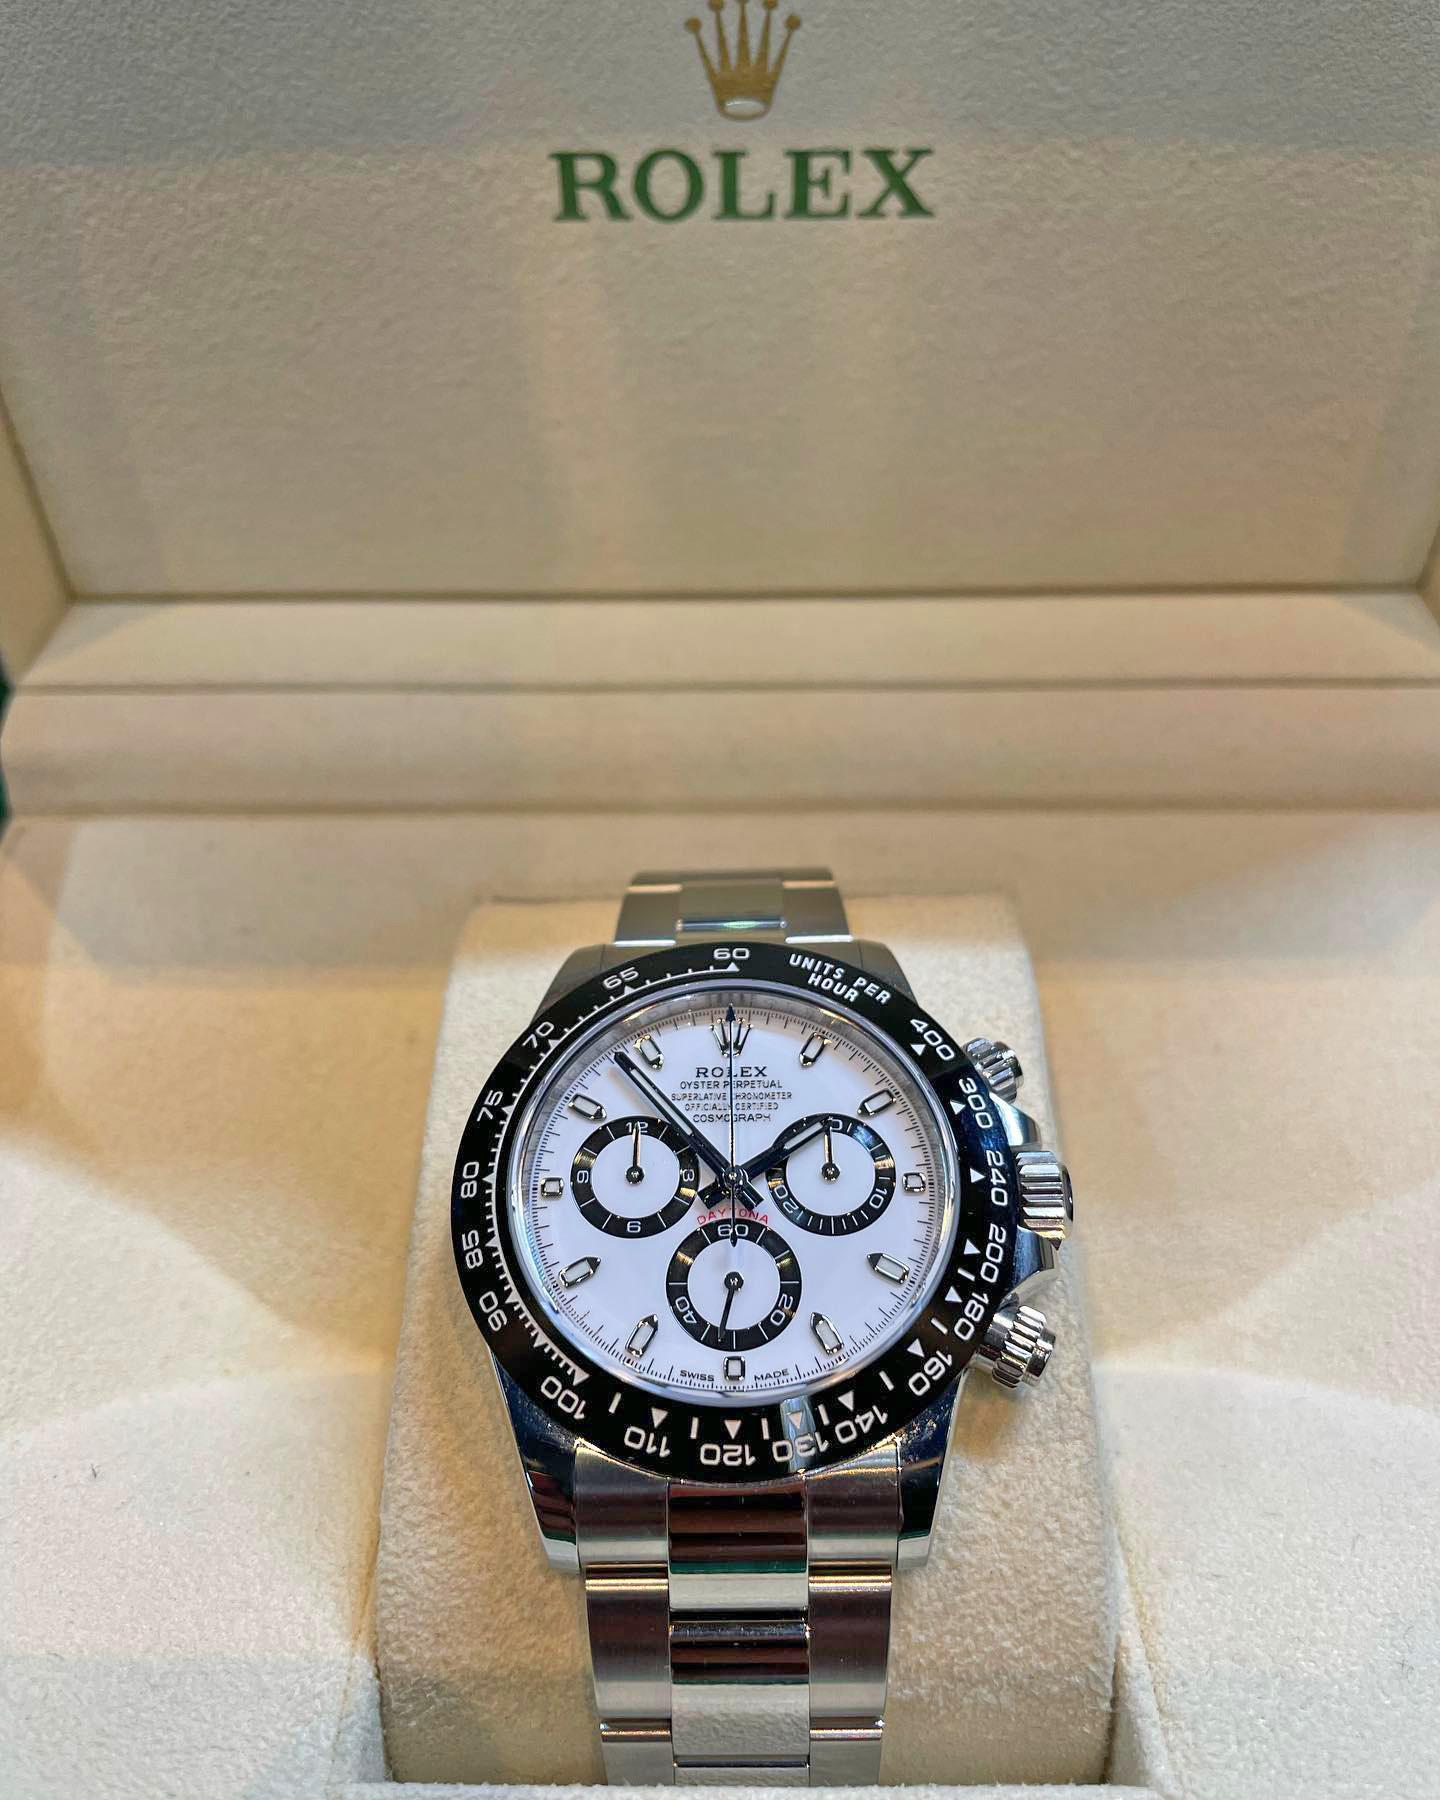 Unworn Professional watch Rolex, Cosmograph Daytona 40 mm Oystersteel, Ref# 116500LN-0001- luxury, elegance and practicality.

Make: Rolex
Model: Cosmograph Daytona
Reference: 116500LN-0001
Diameter: 40 mm
Case material: Oystersteel
Dial color: